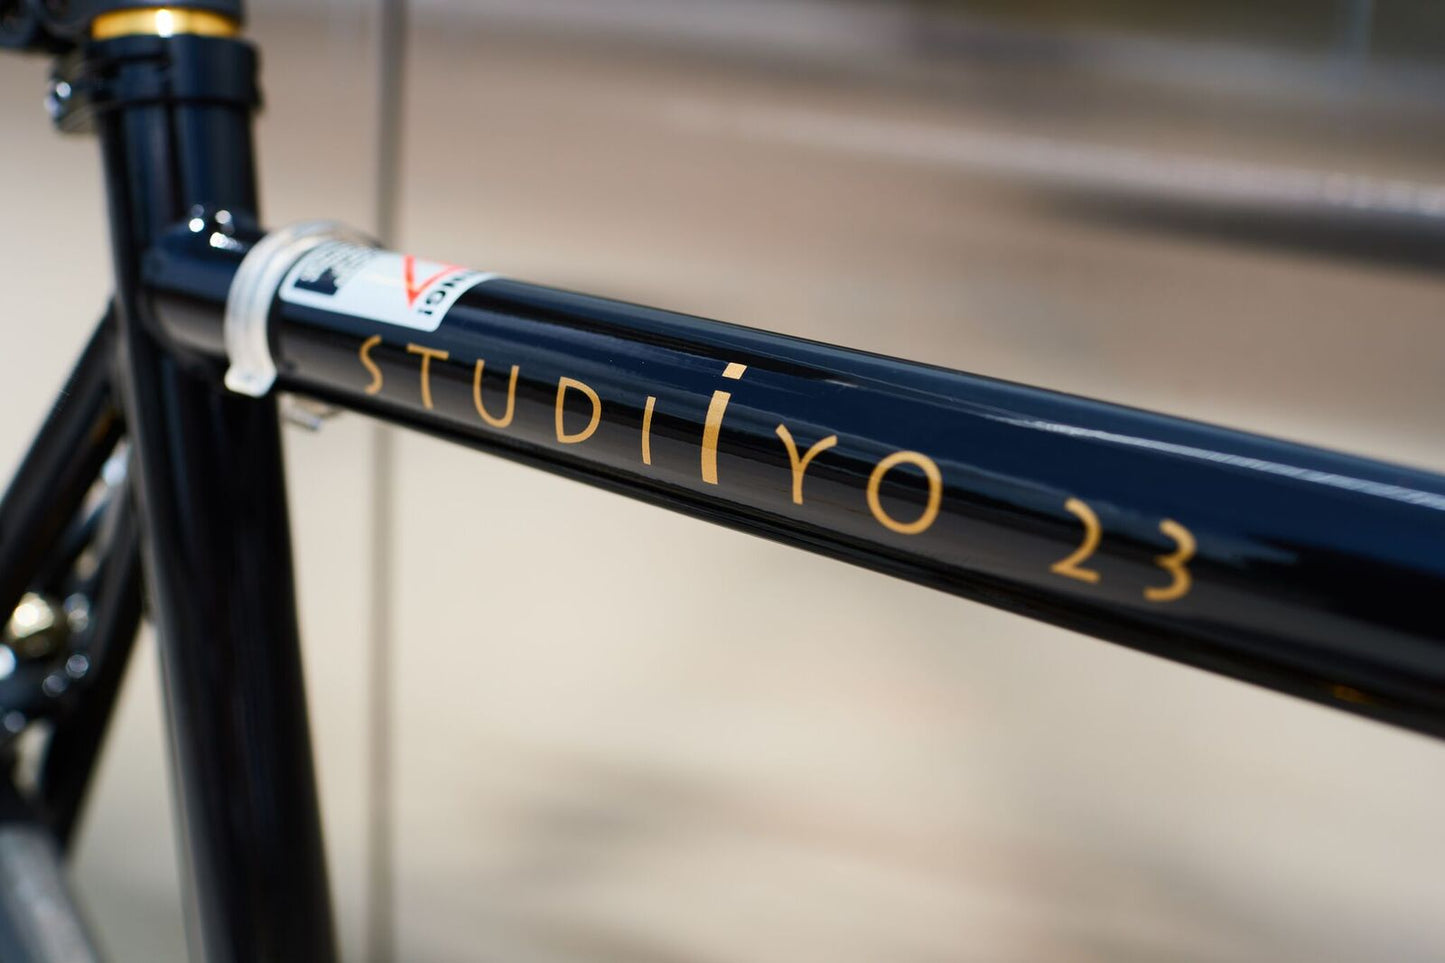 The Black Lotus - A Studiiyo23 x State Bicycle Co. Collab